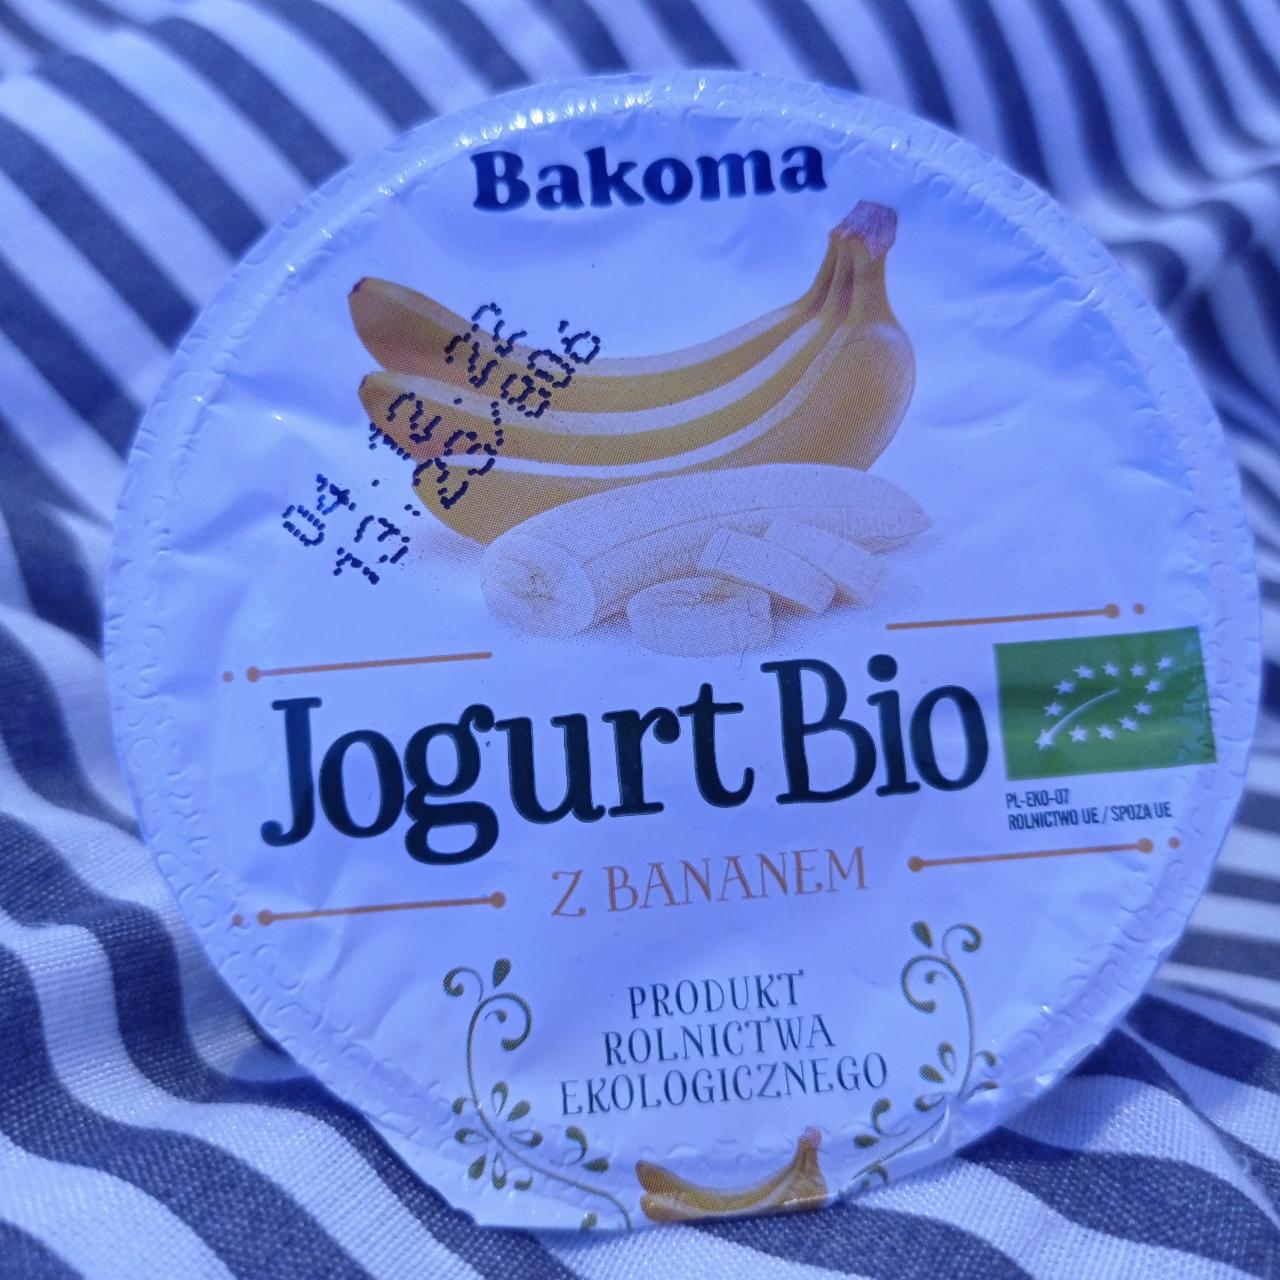 Фото - Bakoma Jogurt Bio z bananem